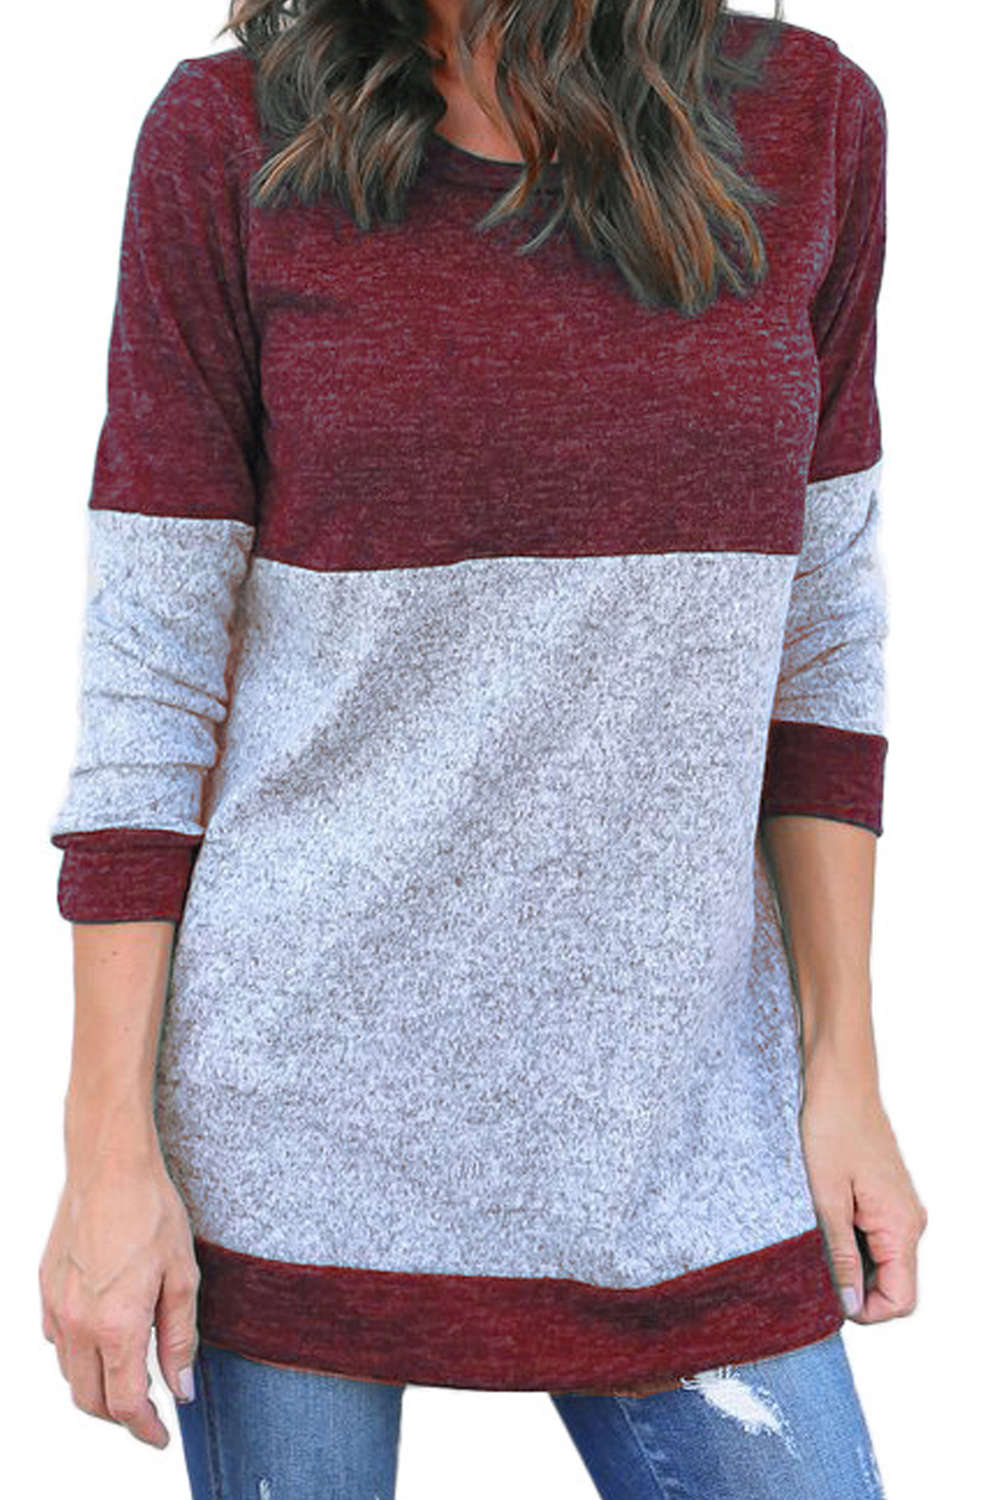 Iyasson Women's Long Sleeve T-Shirt Color Block Sweater